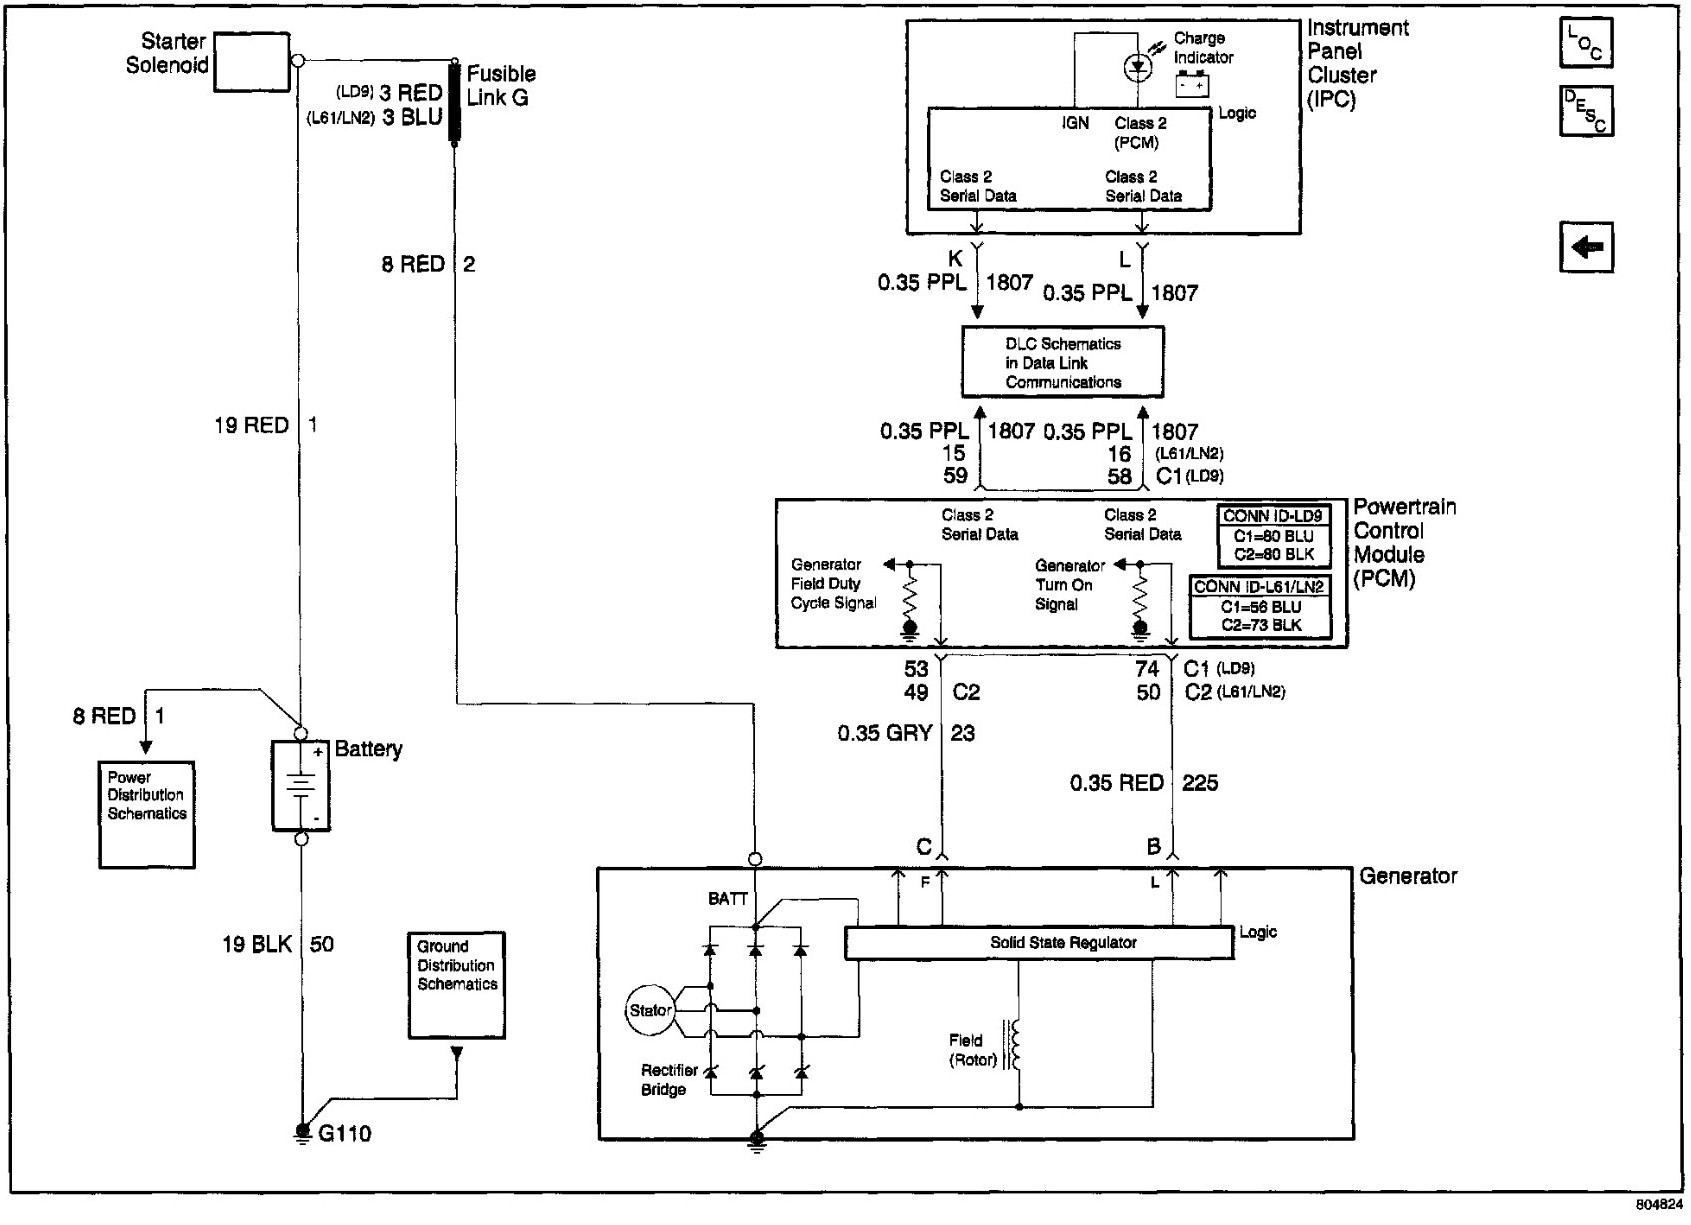 2001 Chevy Cavalier Engine Diagram 2002 Chevy Cavalier Alternator Wiring Diagram Wiring Diagram Database Of 2001 Chevy Cavalier Engine Diagram